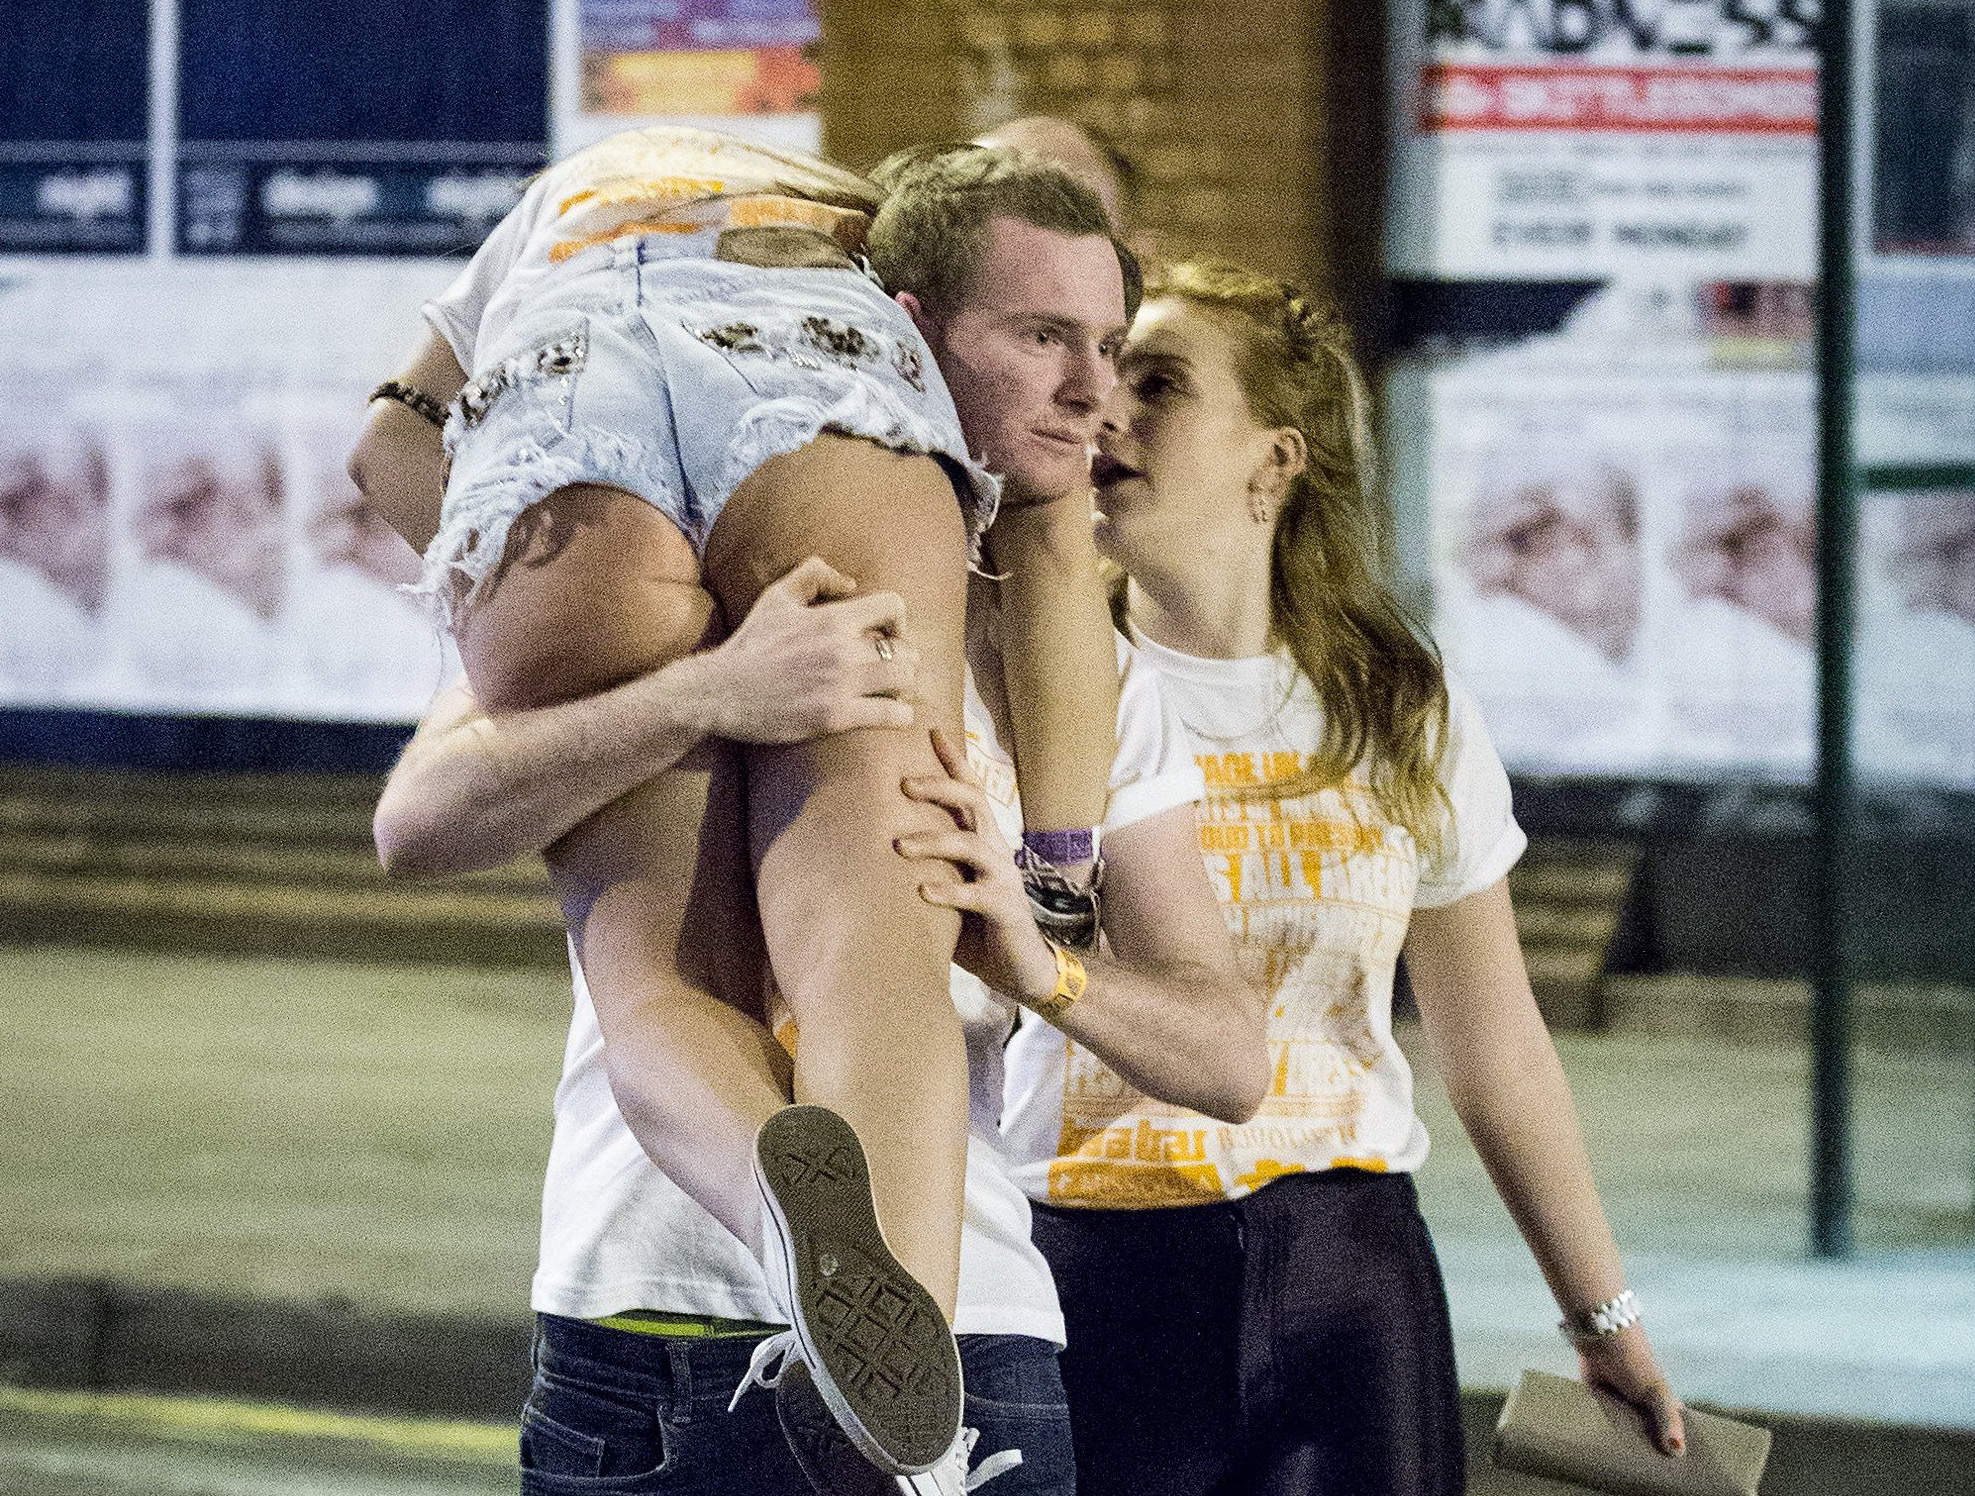 Studente zac bete pe trotuare dupa un festival controversat in Marea Britanie. Imaginile rusinoase, publicate de tabloide